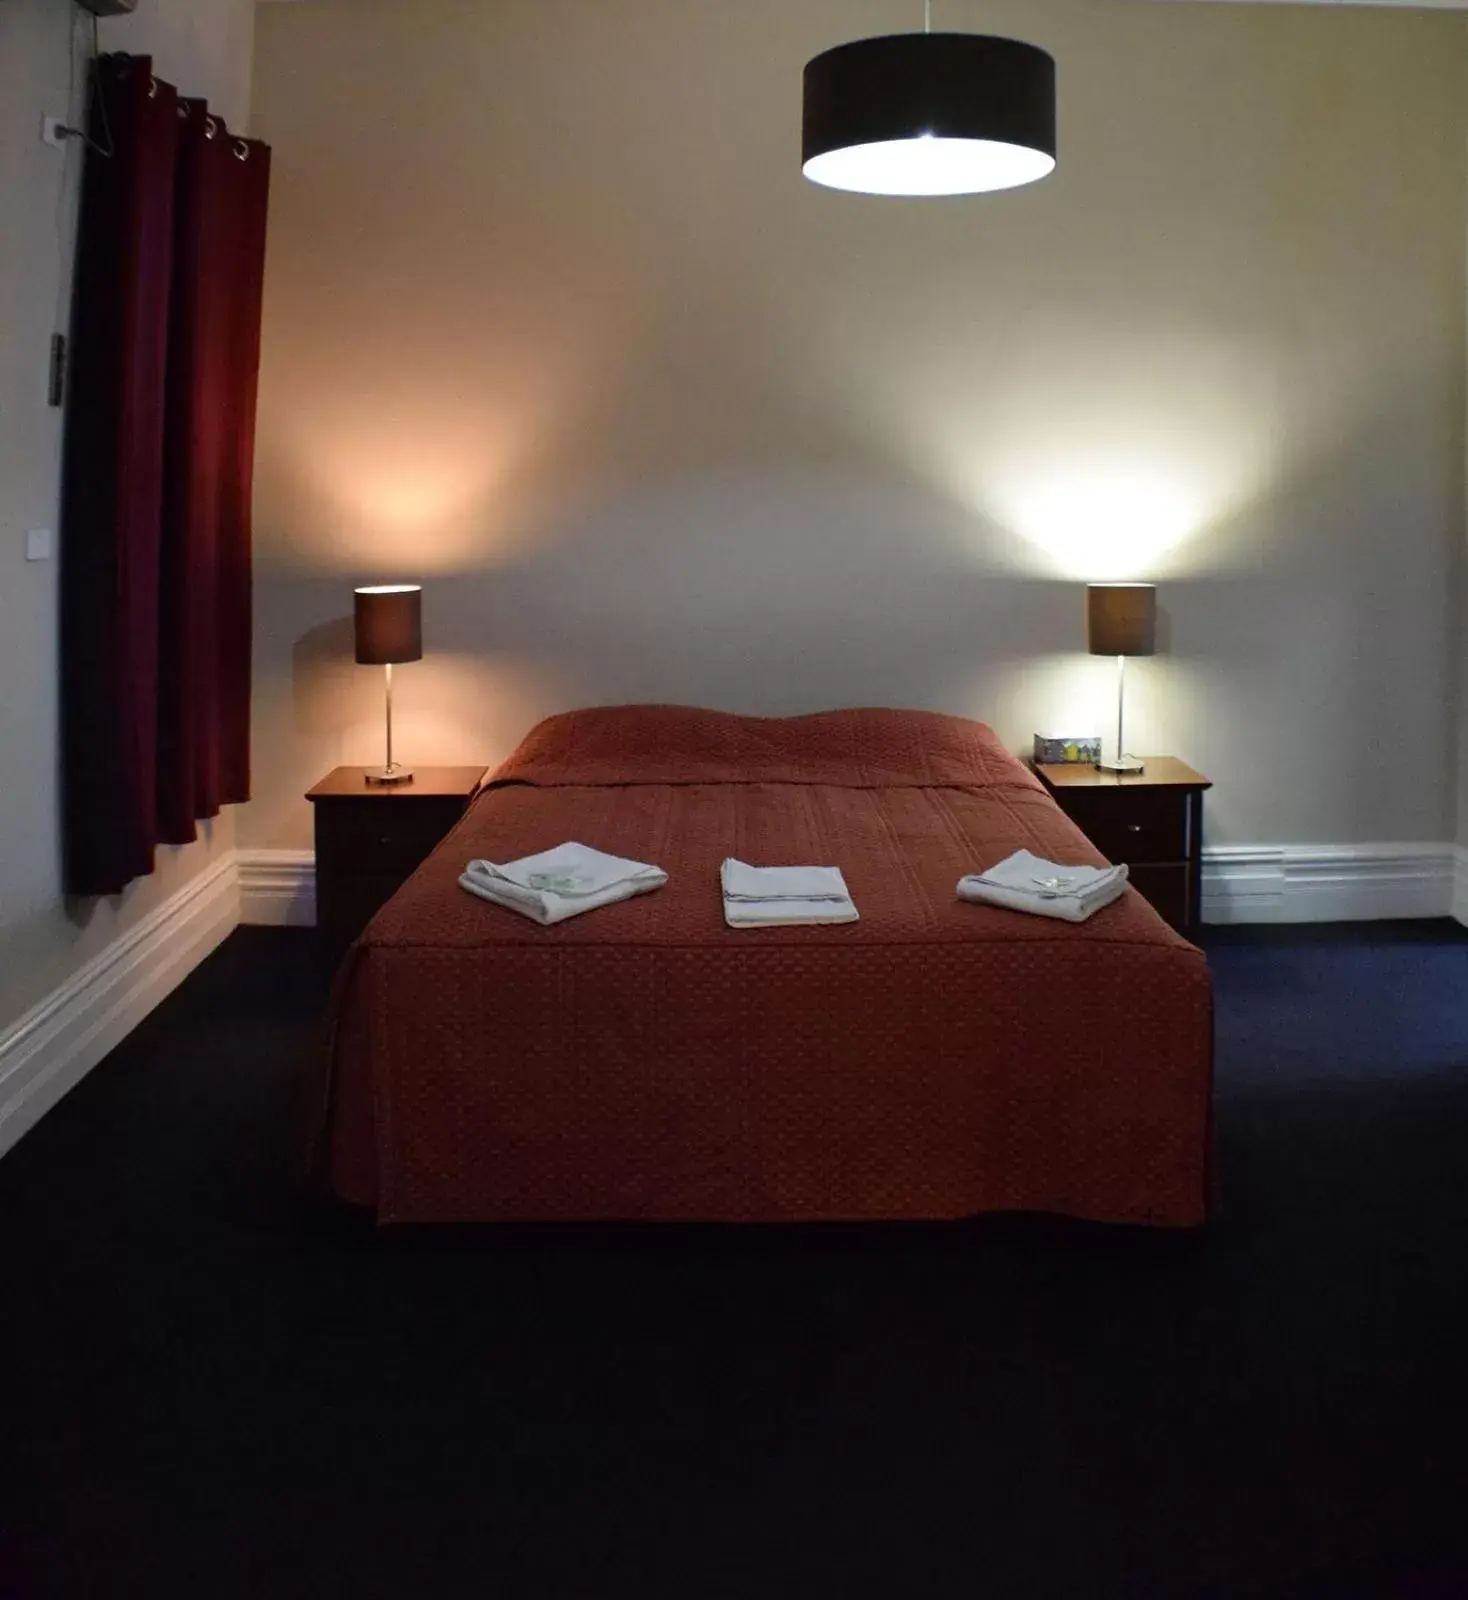 Two-Bedroom Suite in The Palace Hotel Kalgoorlie